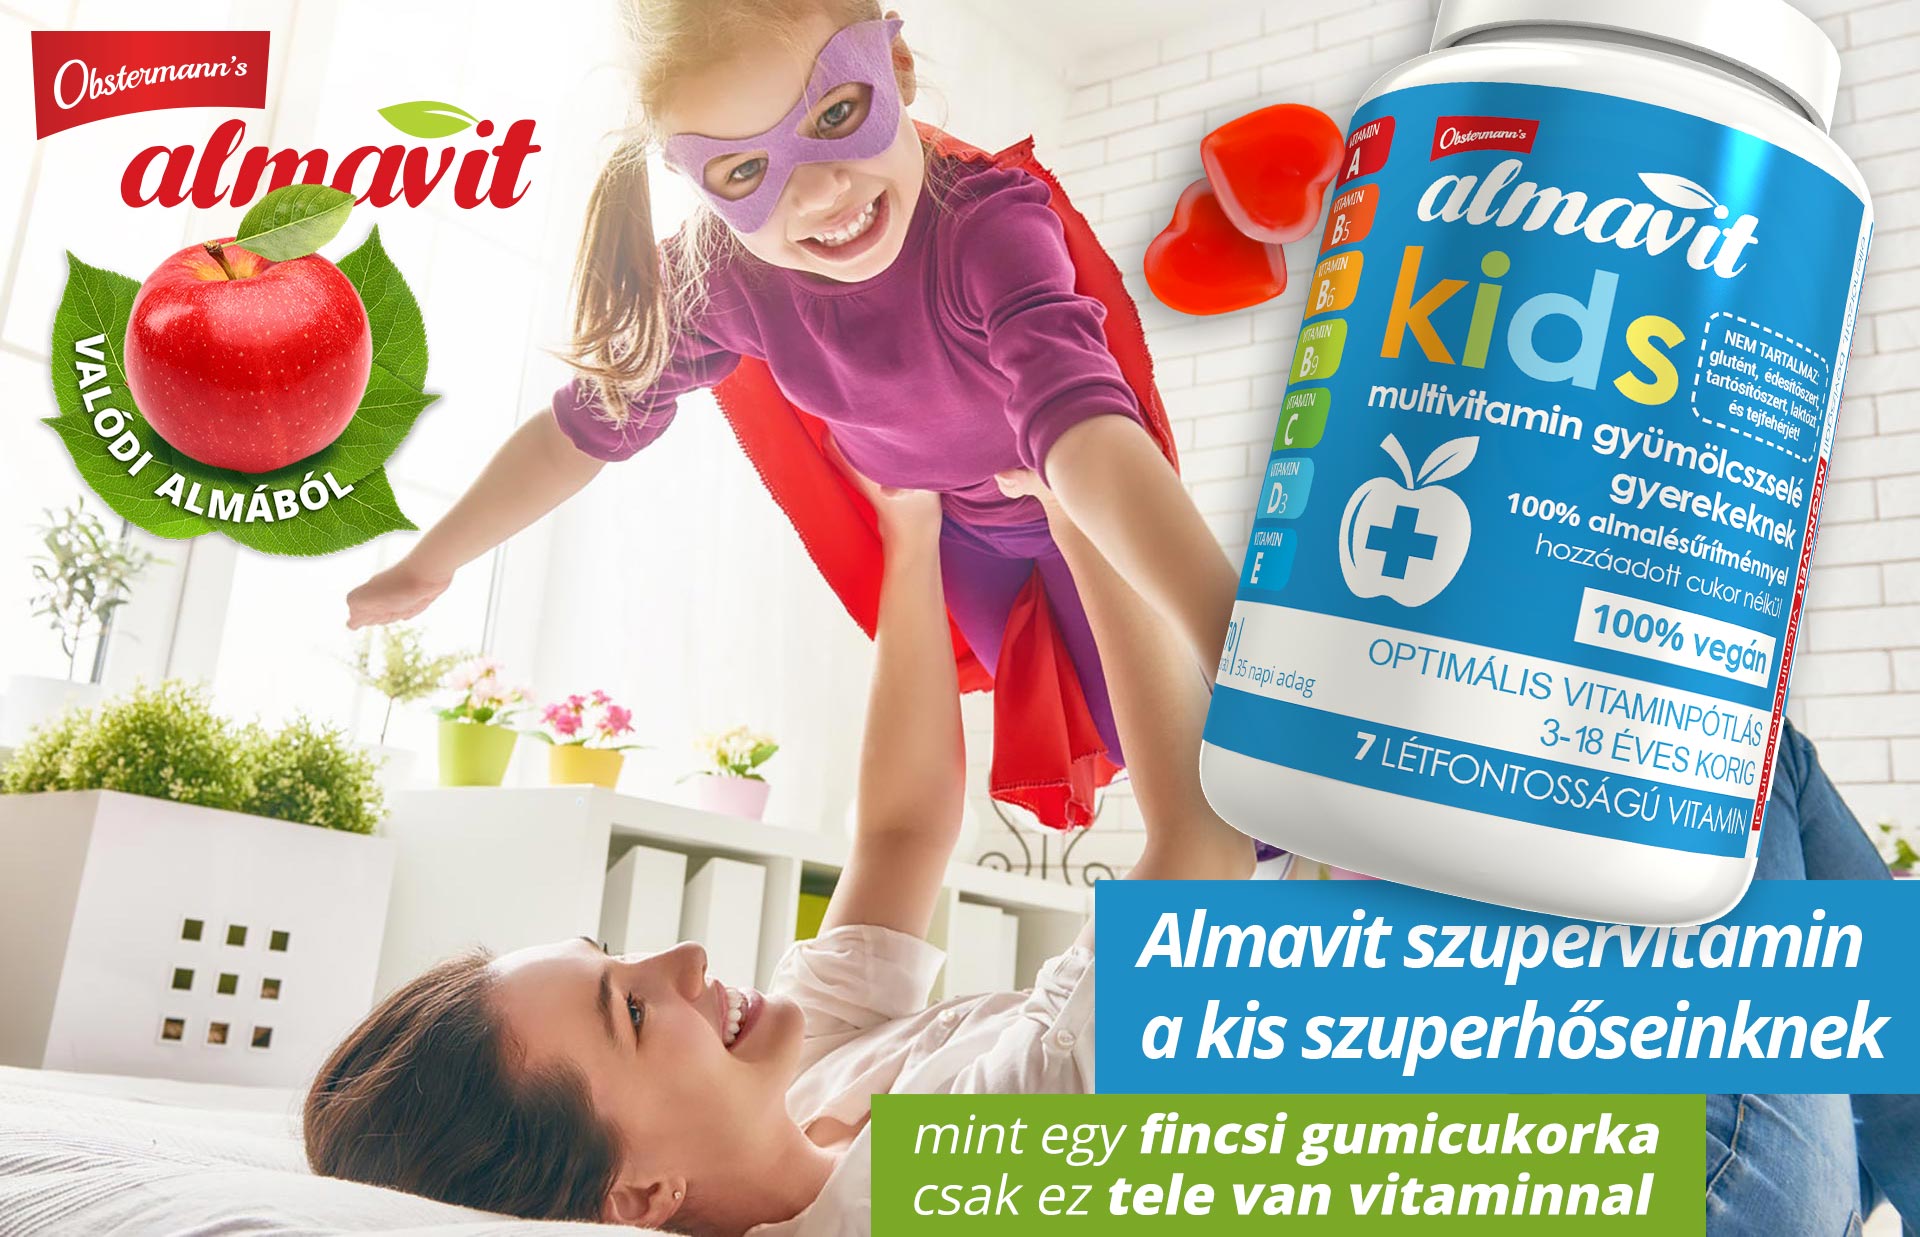 Multivitamin gumicukor gyerekeknek 7 létfontosságú vitaminnal